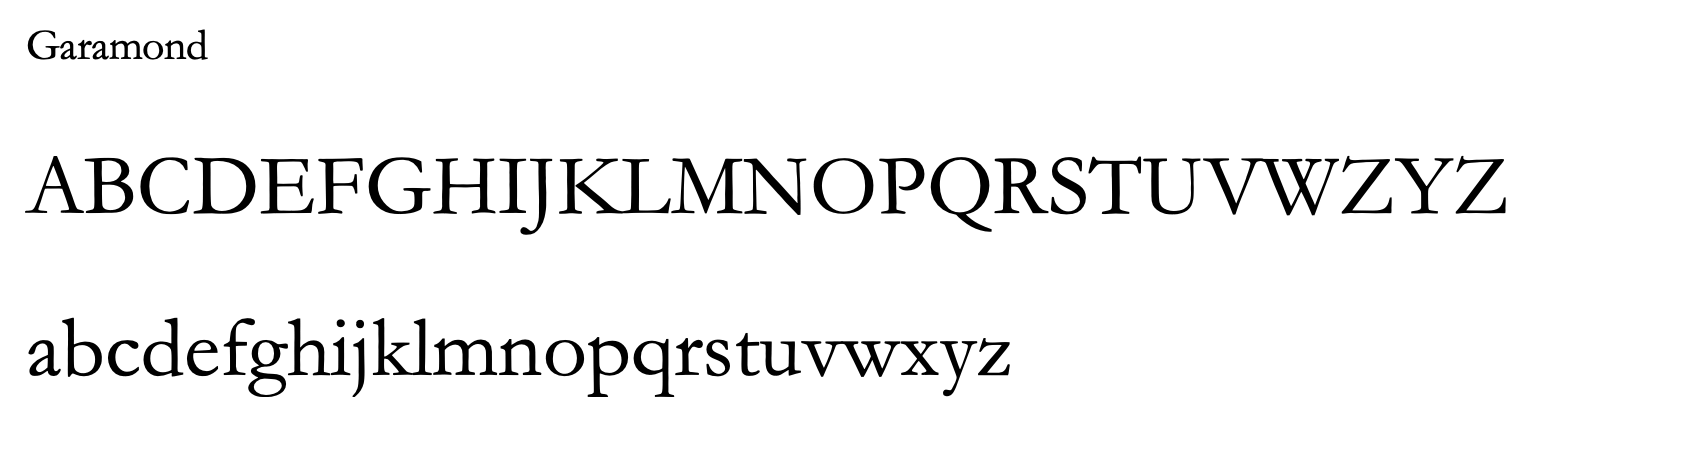 Garamond - good email signature font